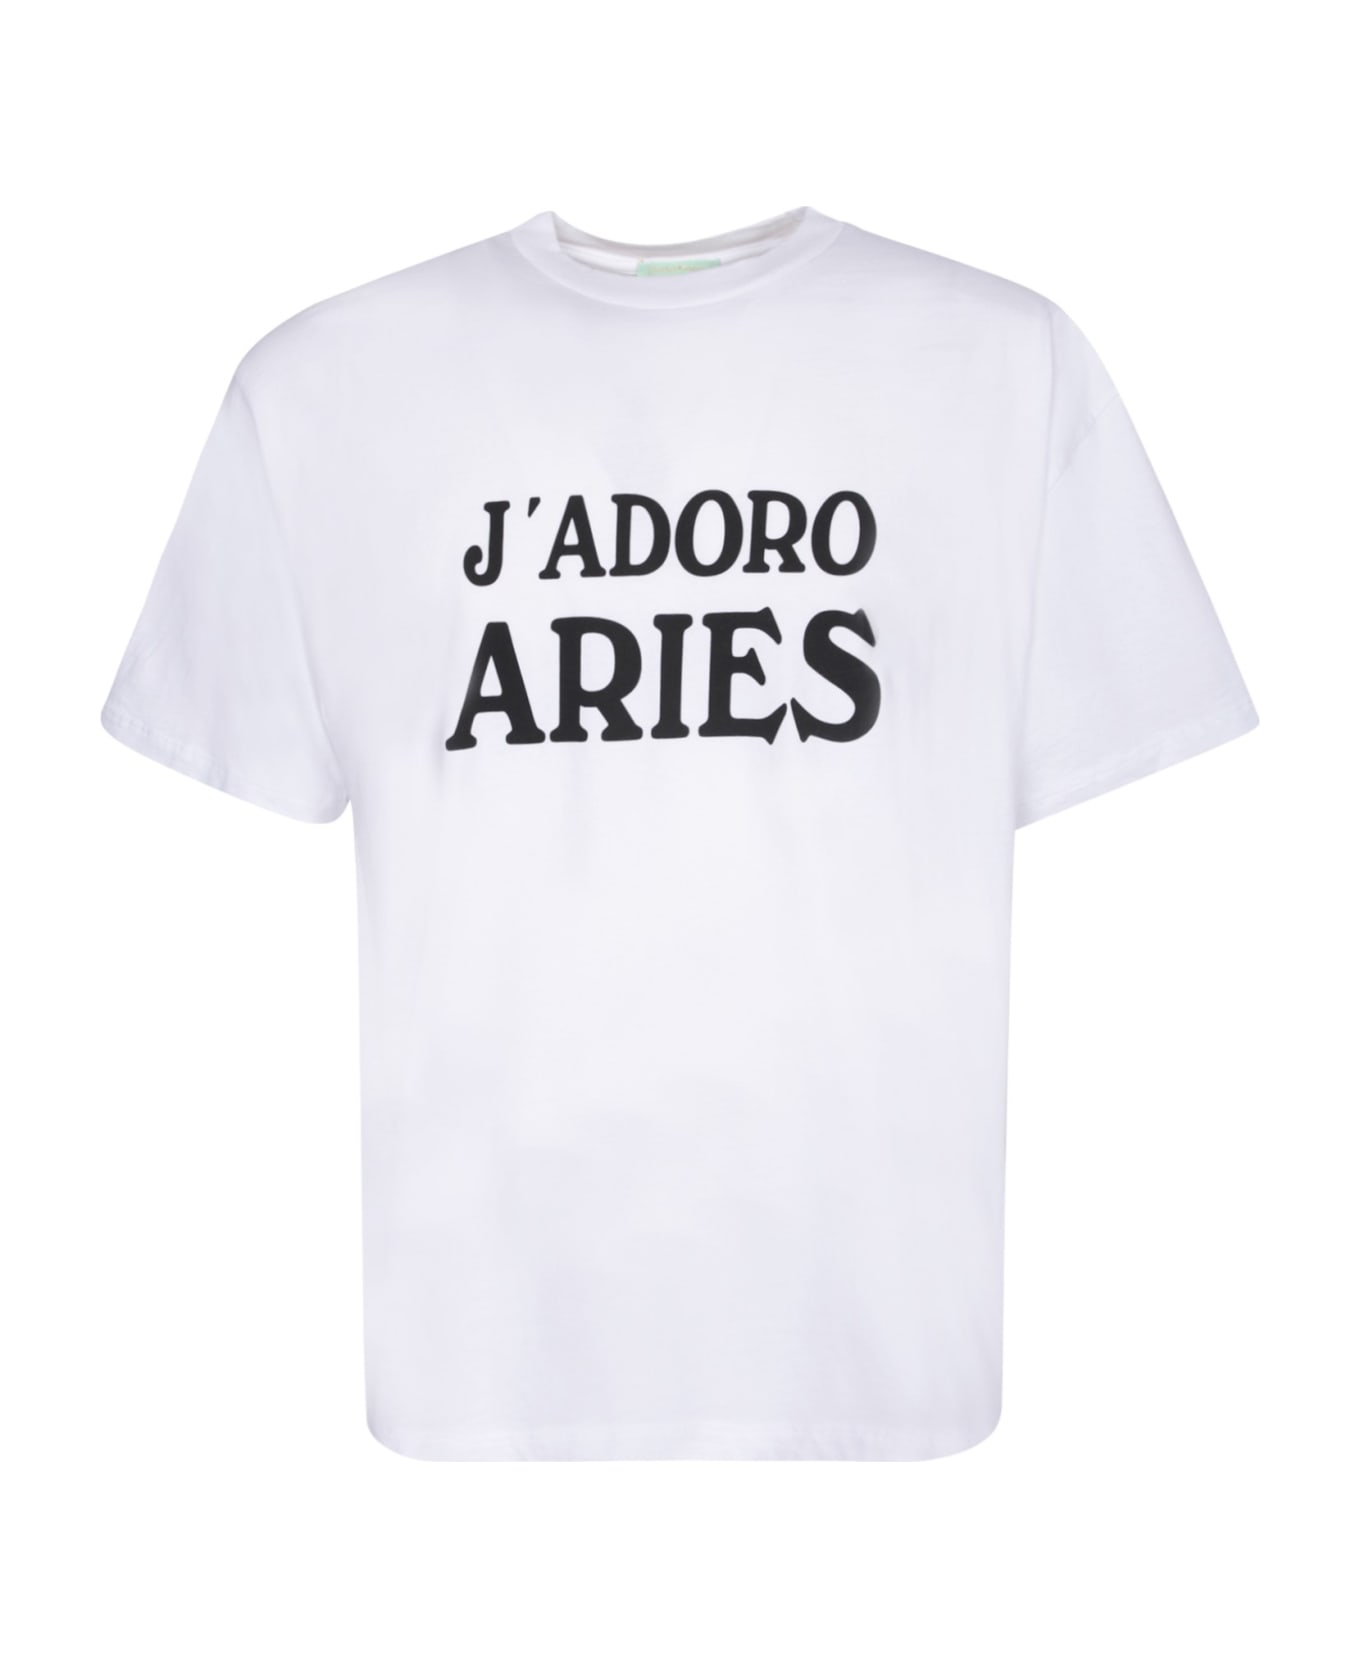 Aries J'adoro T-shirt - White